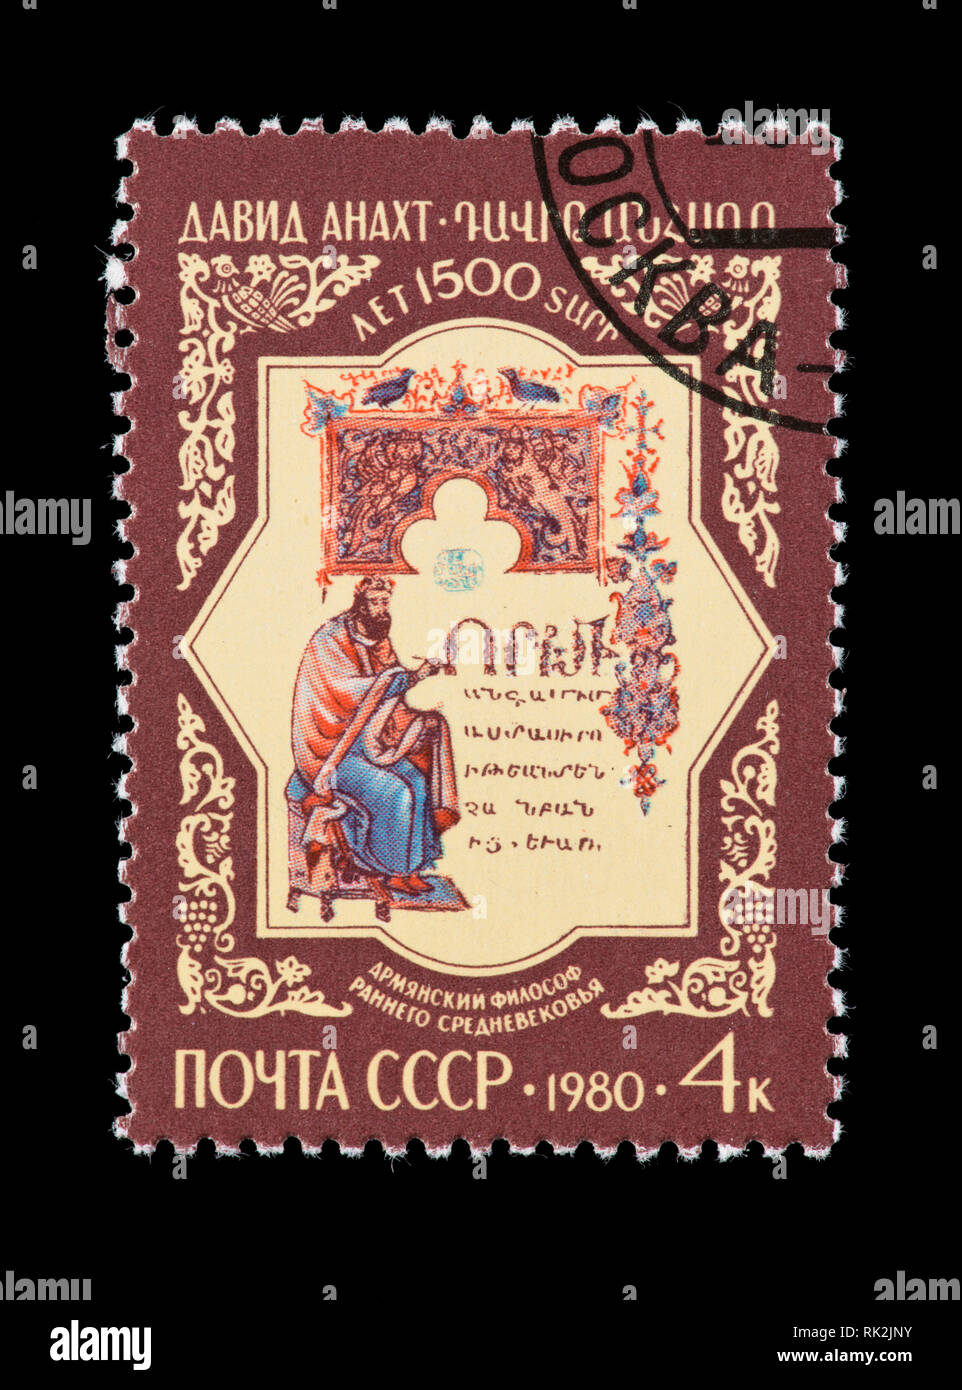 Postage stamp from the Soviet Union depicting David Anacht and illuminated manuscript, (Armenian manuscript), 1200th birth anniversary. Stock Photo